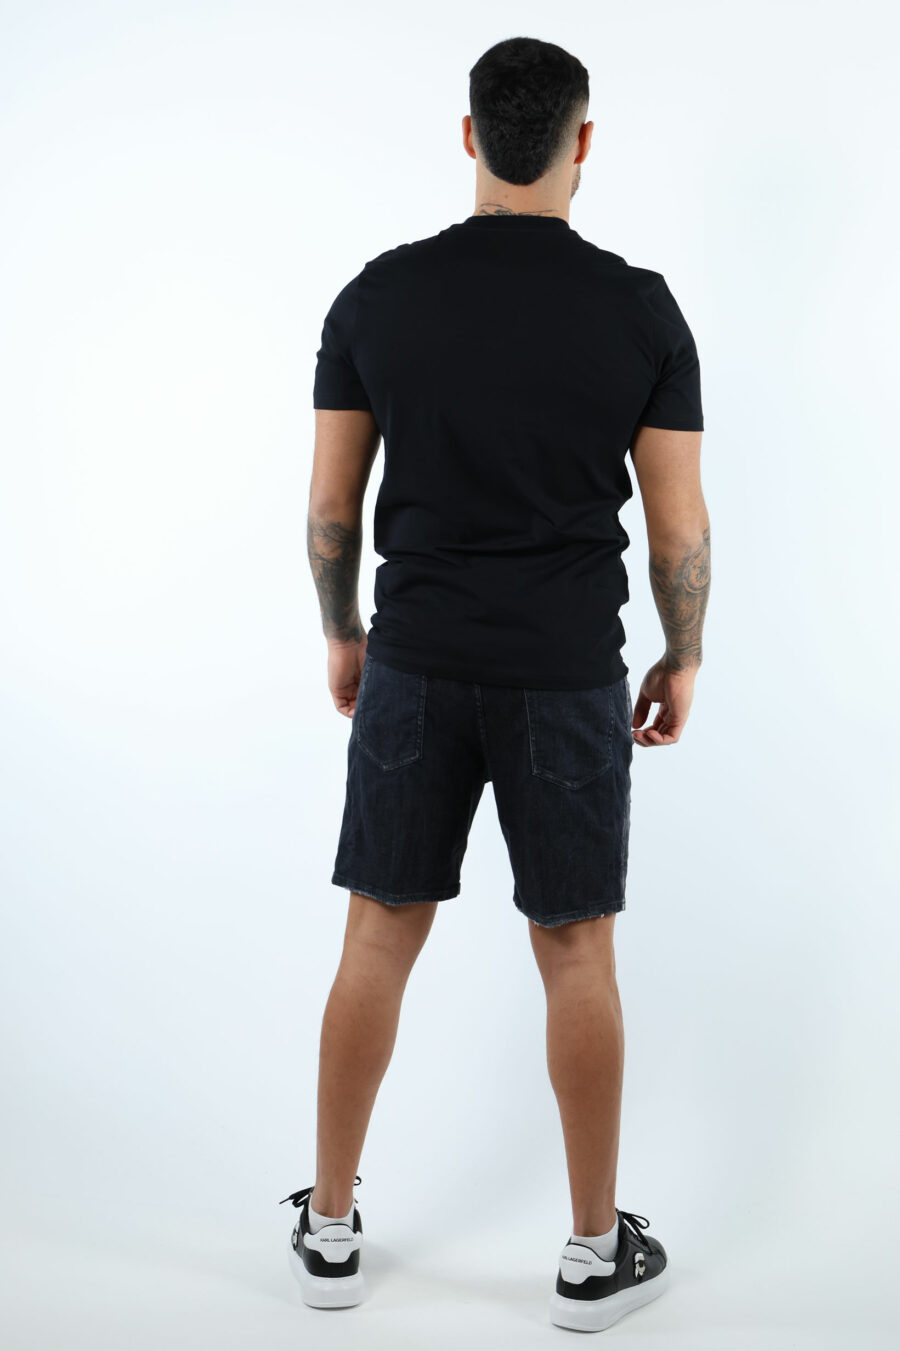 T-shirt noir avec minilogue "teddy" brodé - 107179